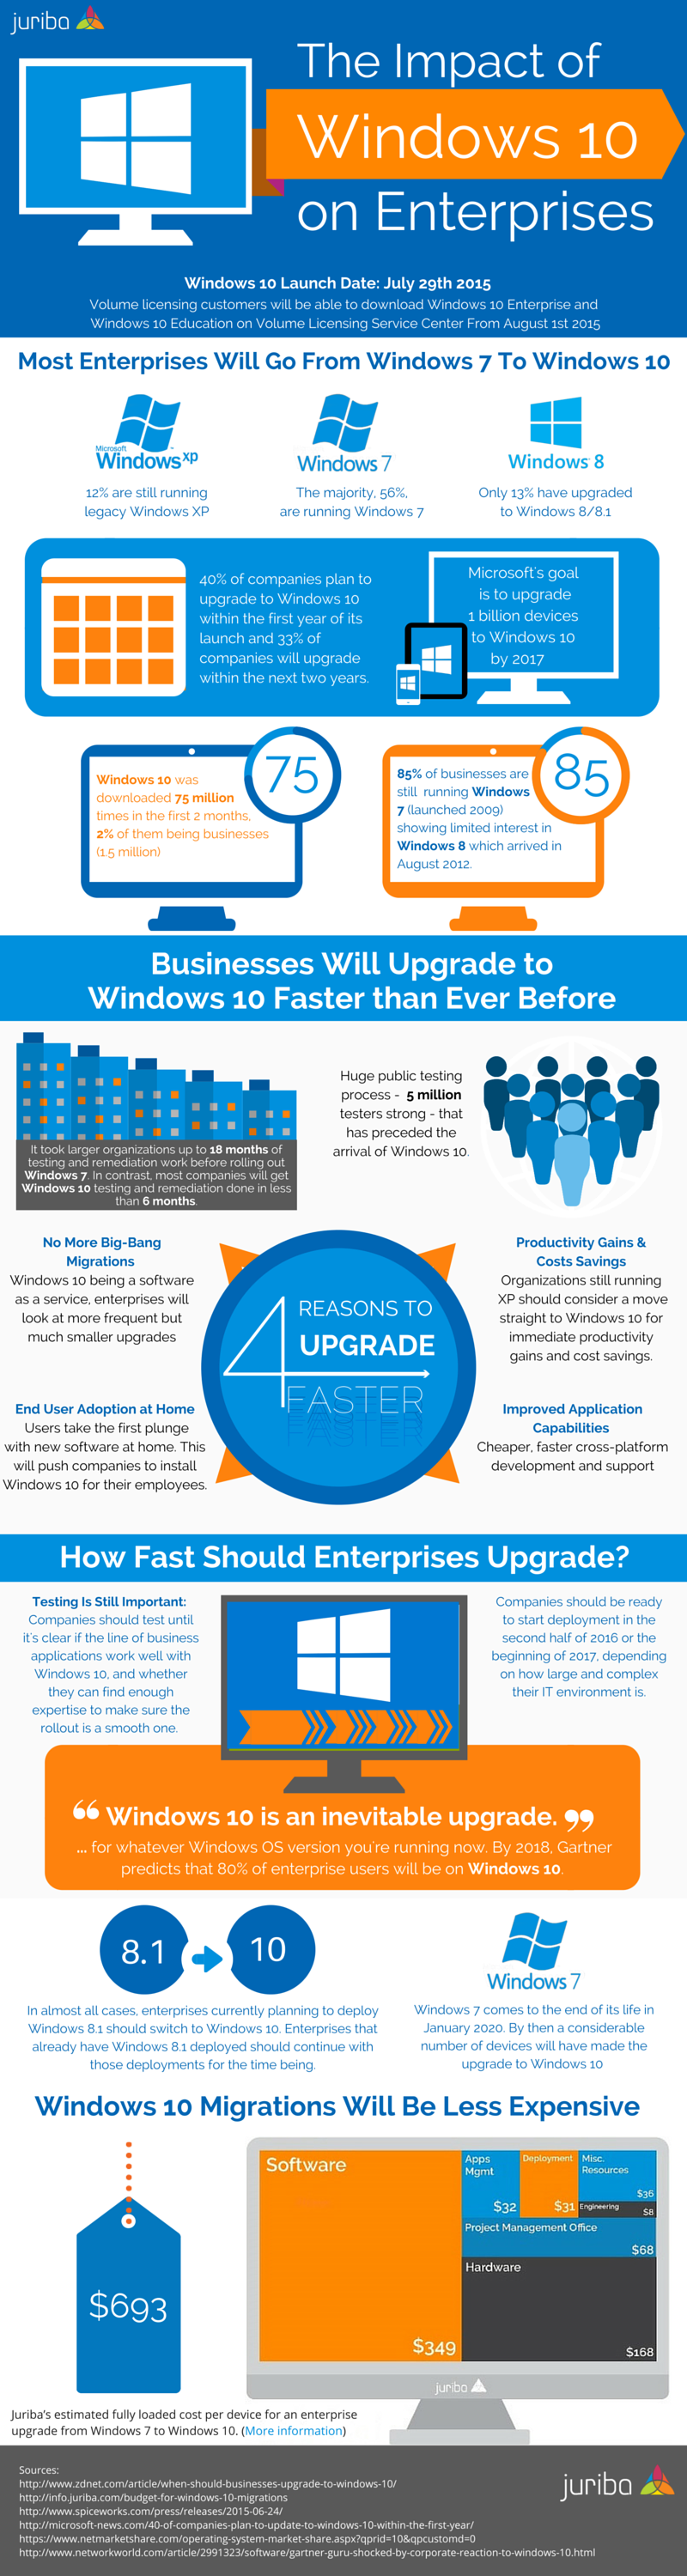 Juriba_Windows_10_Impact_on_Enterprises_Infographic.png